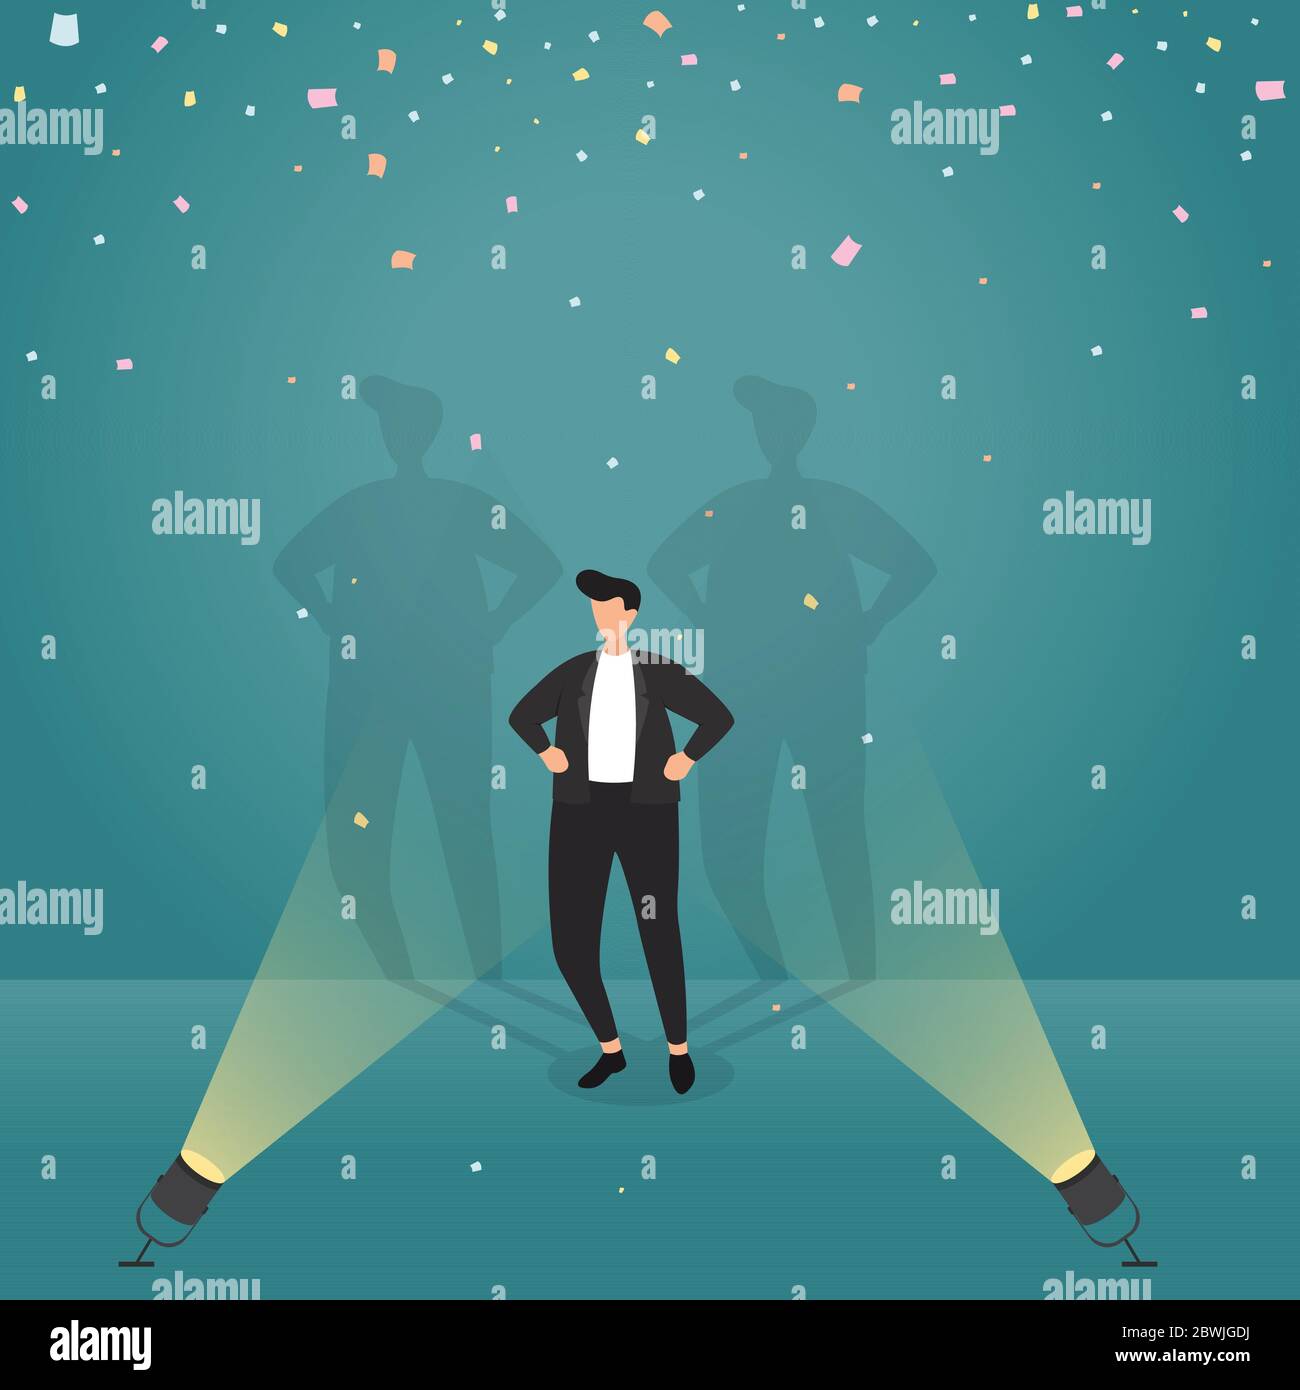 Successful Businessman Confident with Spotlight Confetti Business Concept Illustration Stock Vector